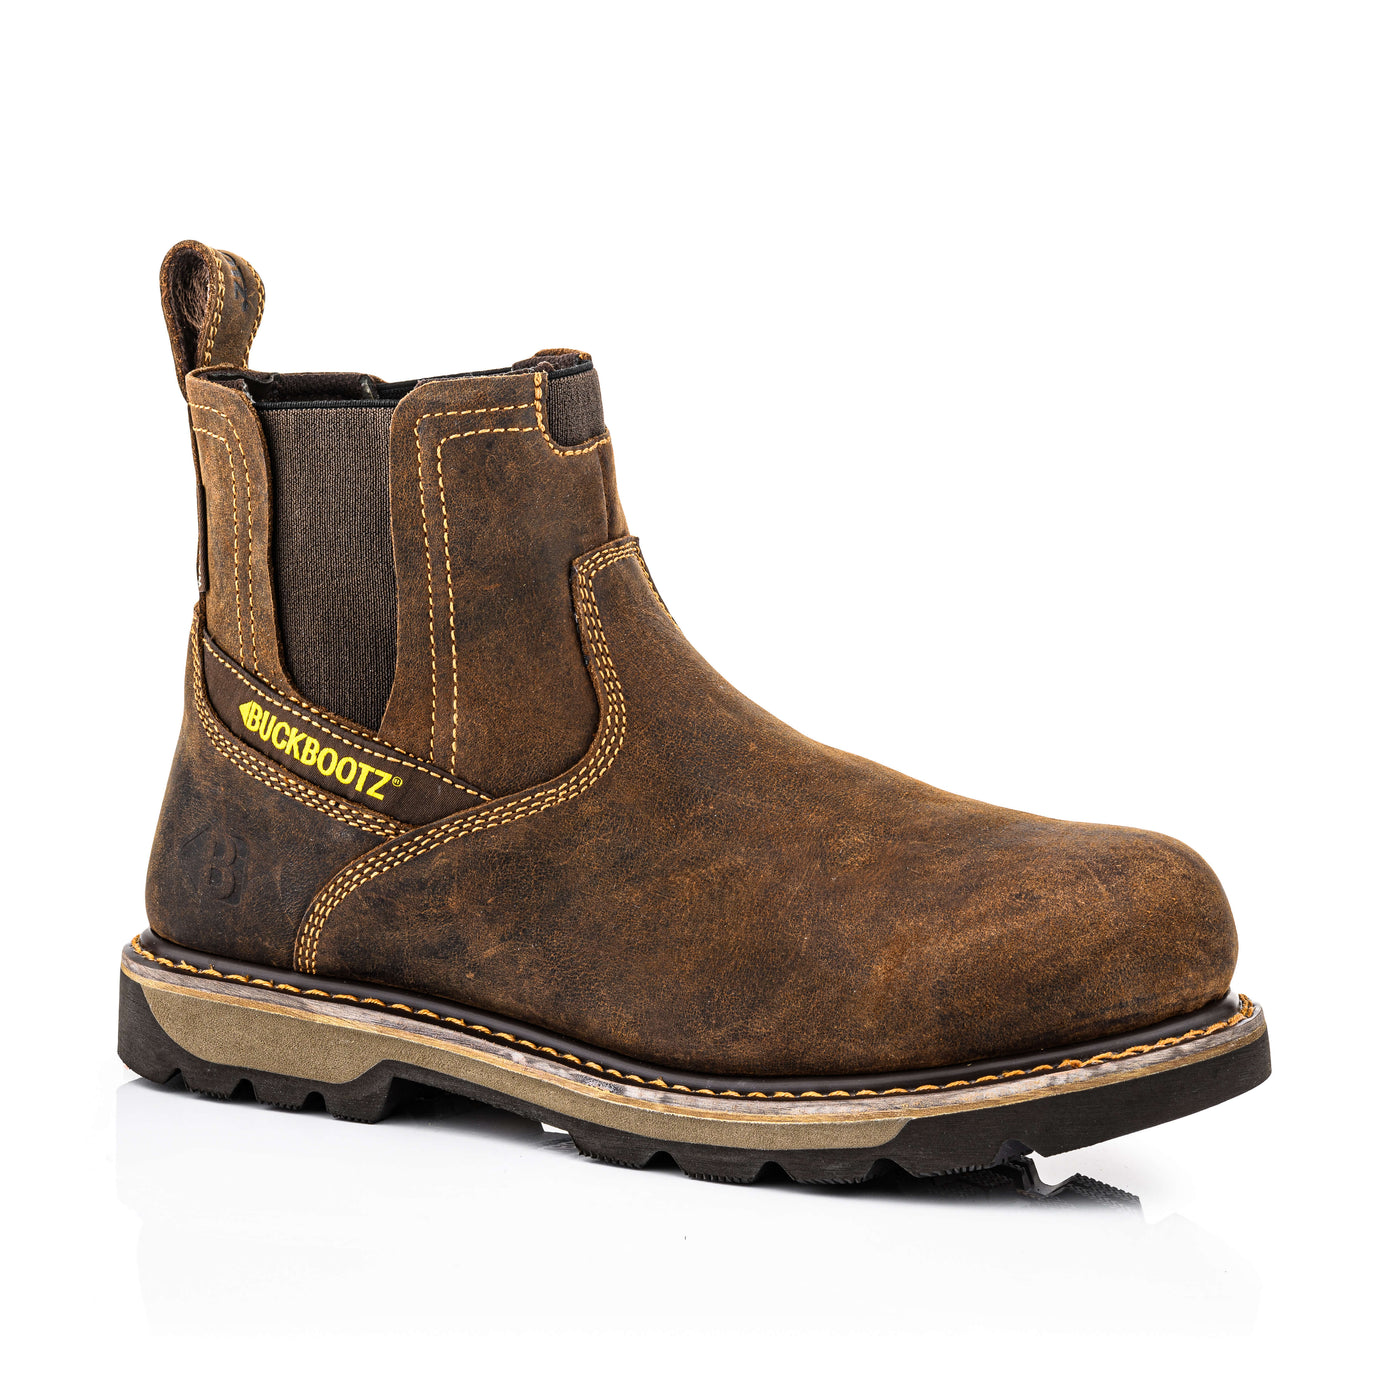 Buckbootz B1180 Waterproof Goodyear Welted Safety Dealer Boots Brown 1#colour_brown